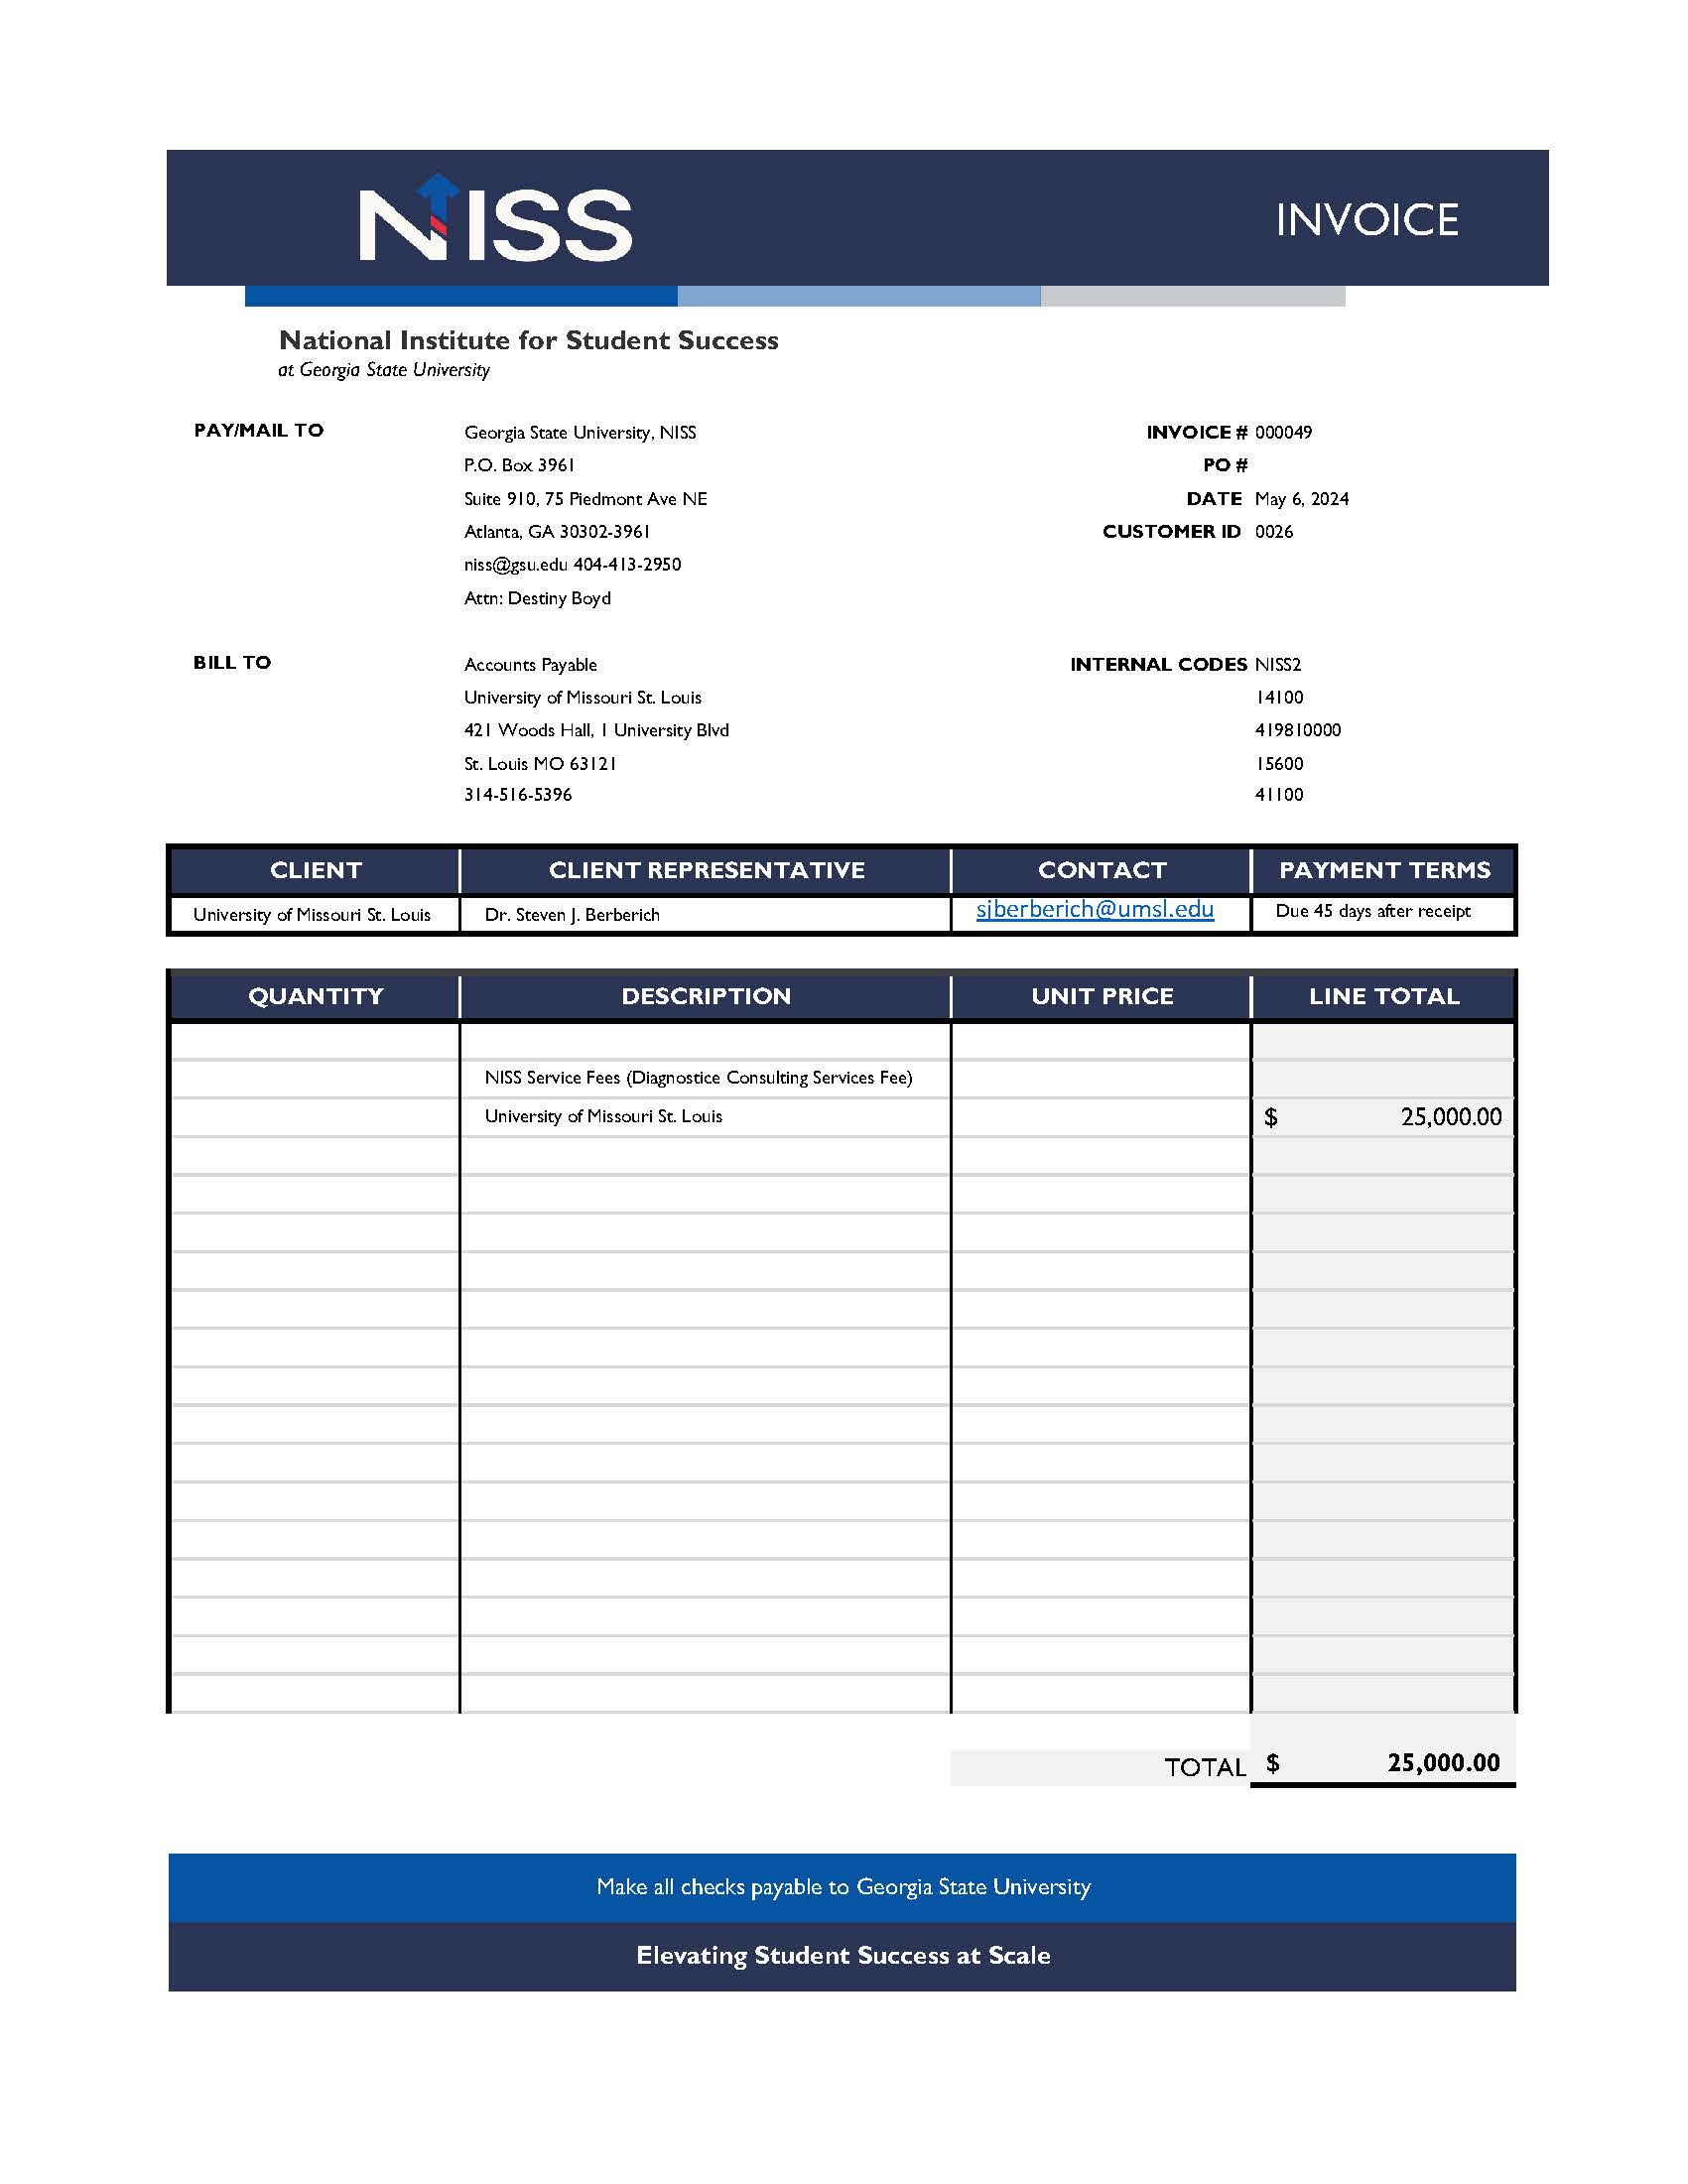 NISS Diagnostic & Playbook: University of Missouri St. Louis